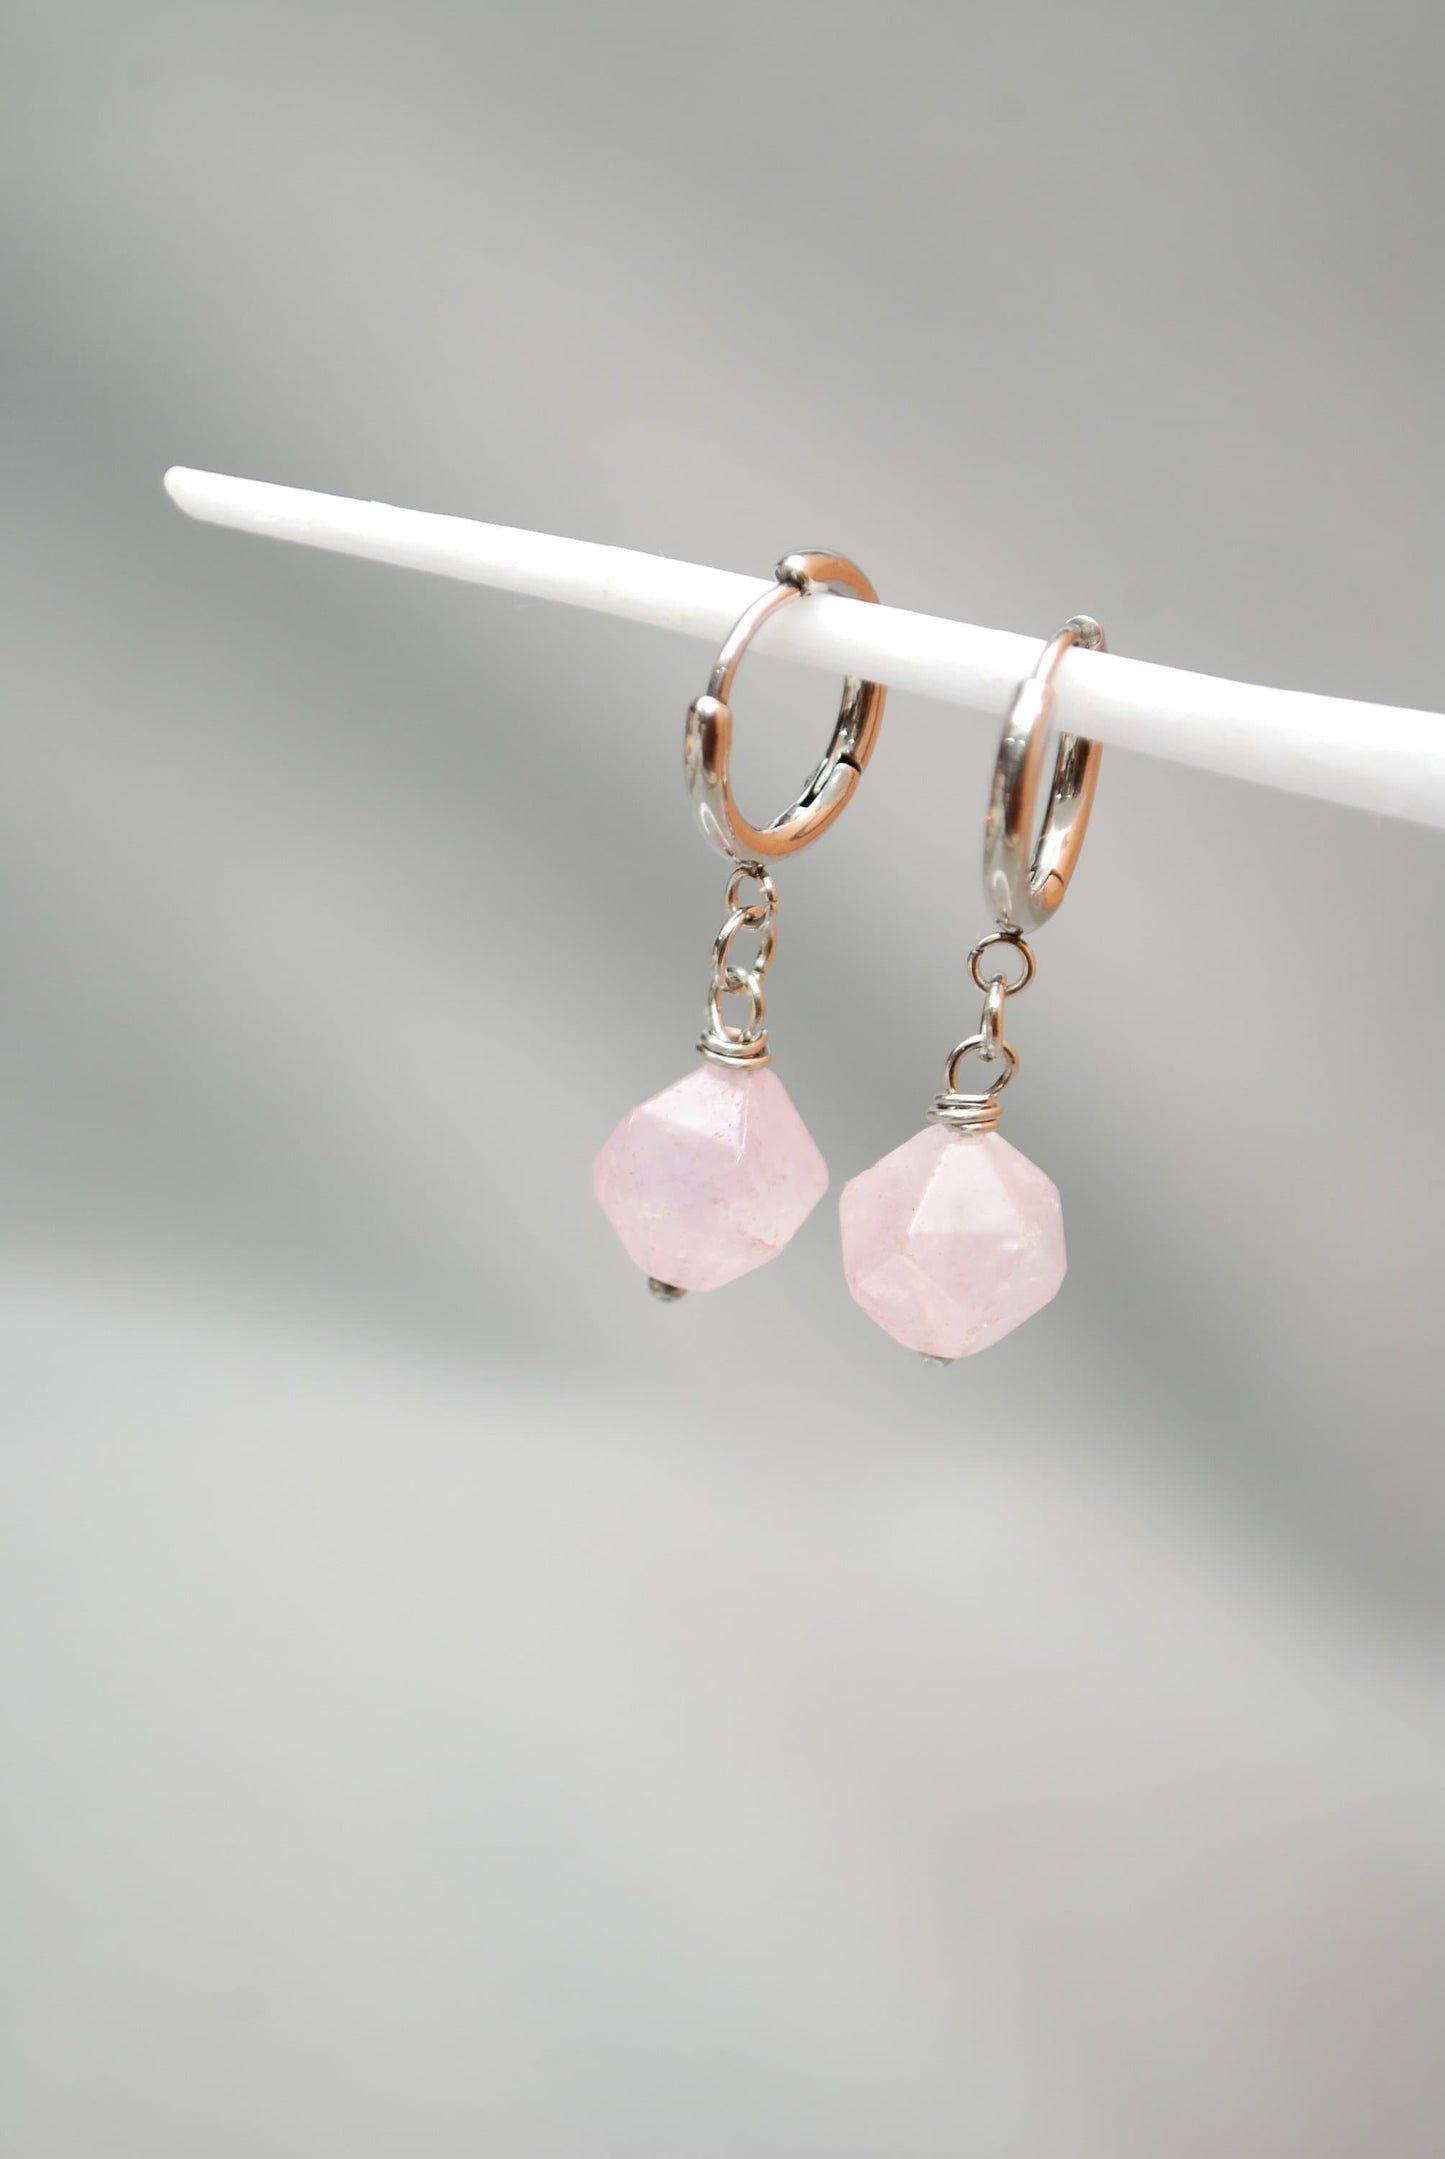 Elegant pink stone earrings, Handcrafted earrings with super seven stone, Elegant mimalist style, Estibela design, 5cm - 2"